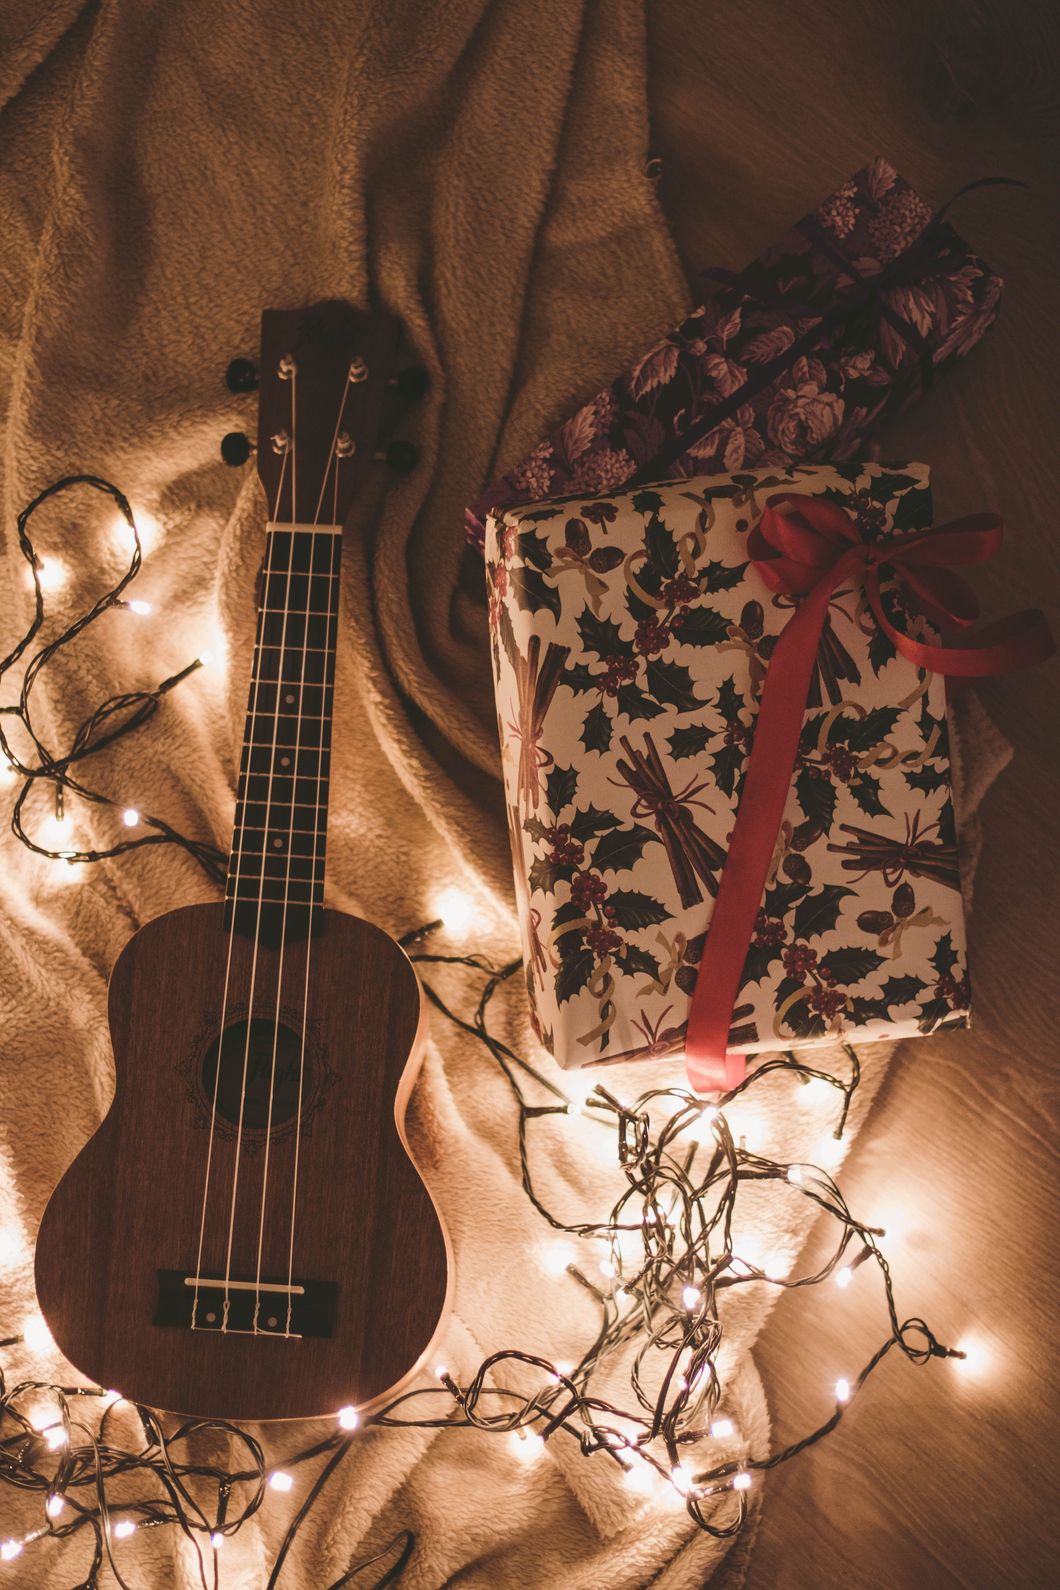 https://www.pexels.com/photo/ukulele-beside-a-floral-box-and-string-lights-704751/